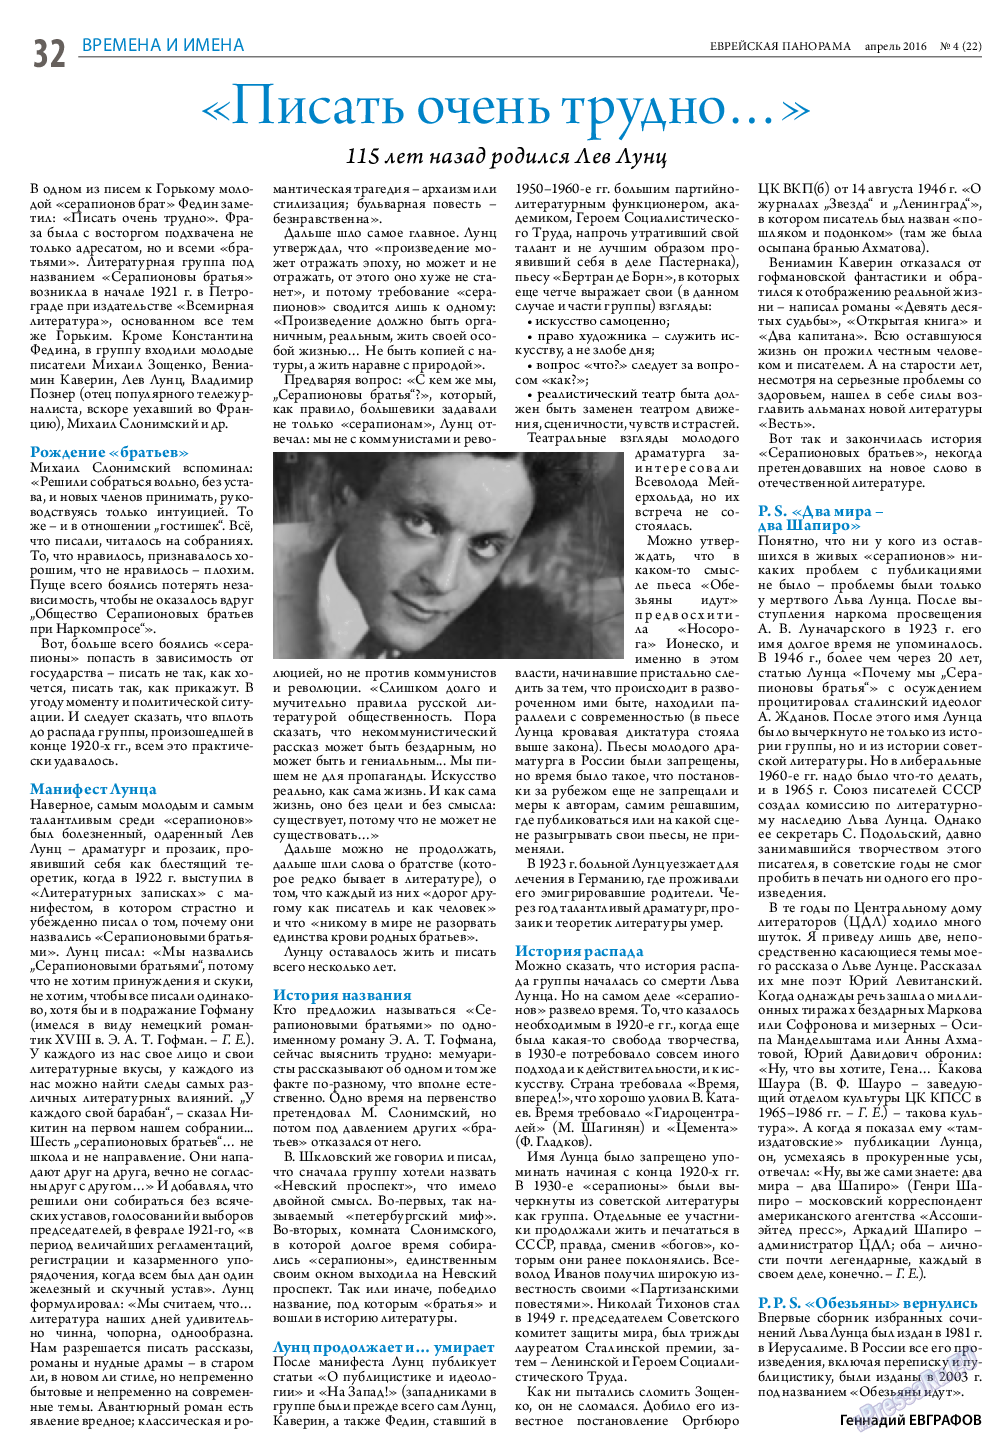 Еврейская панорама, газета. 2016 №4 стр.32